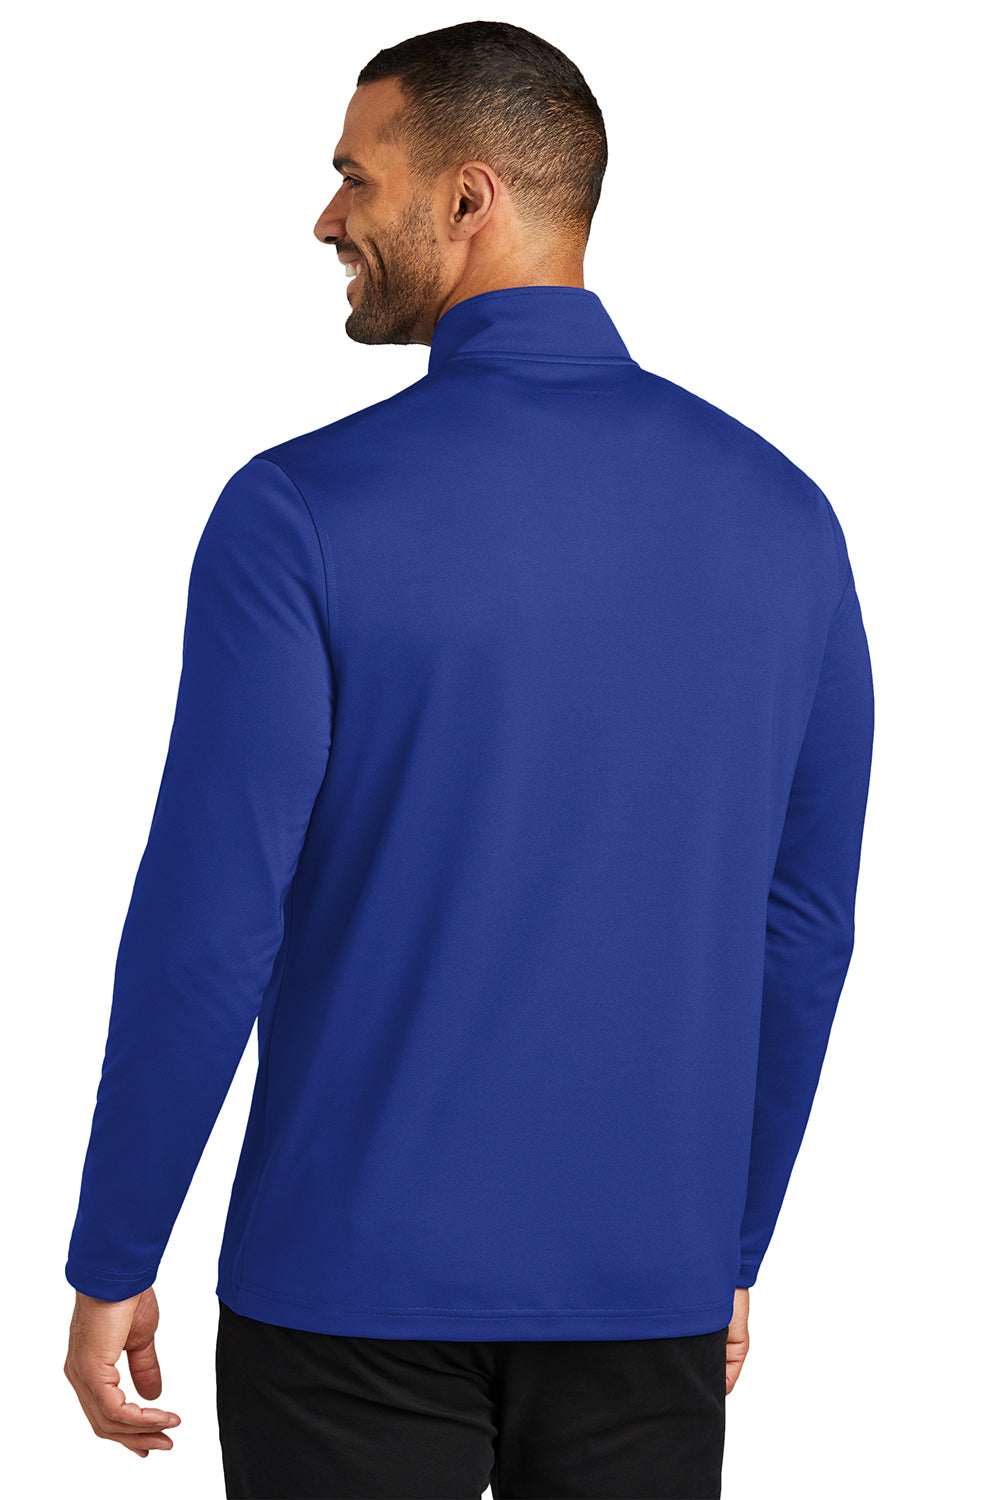 Port Authority K112 Mens Dry Zone UV Micro Mesh 1/4 Zip Sweatshirt True Royal Blue Back